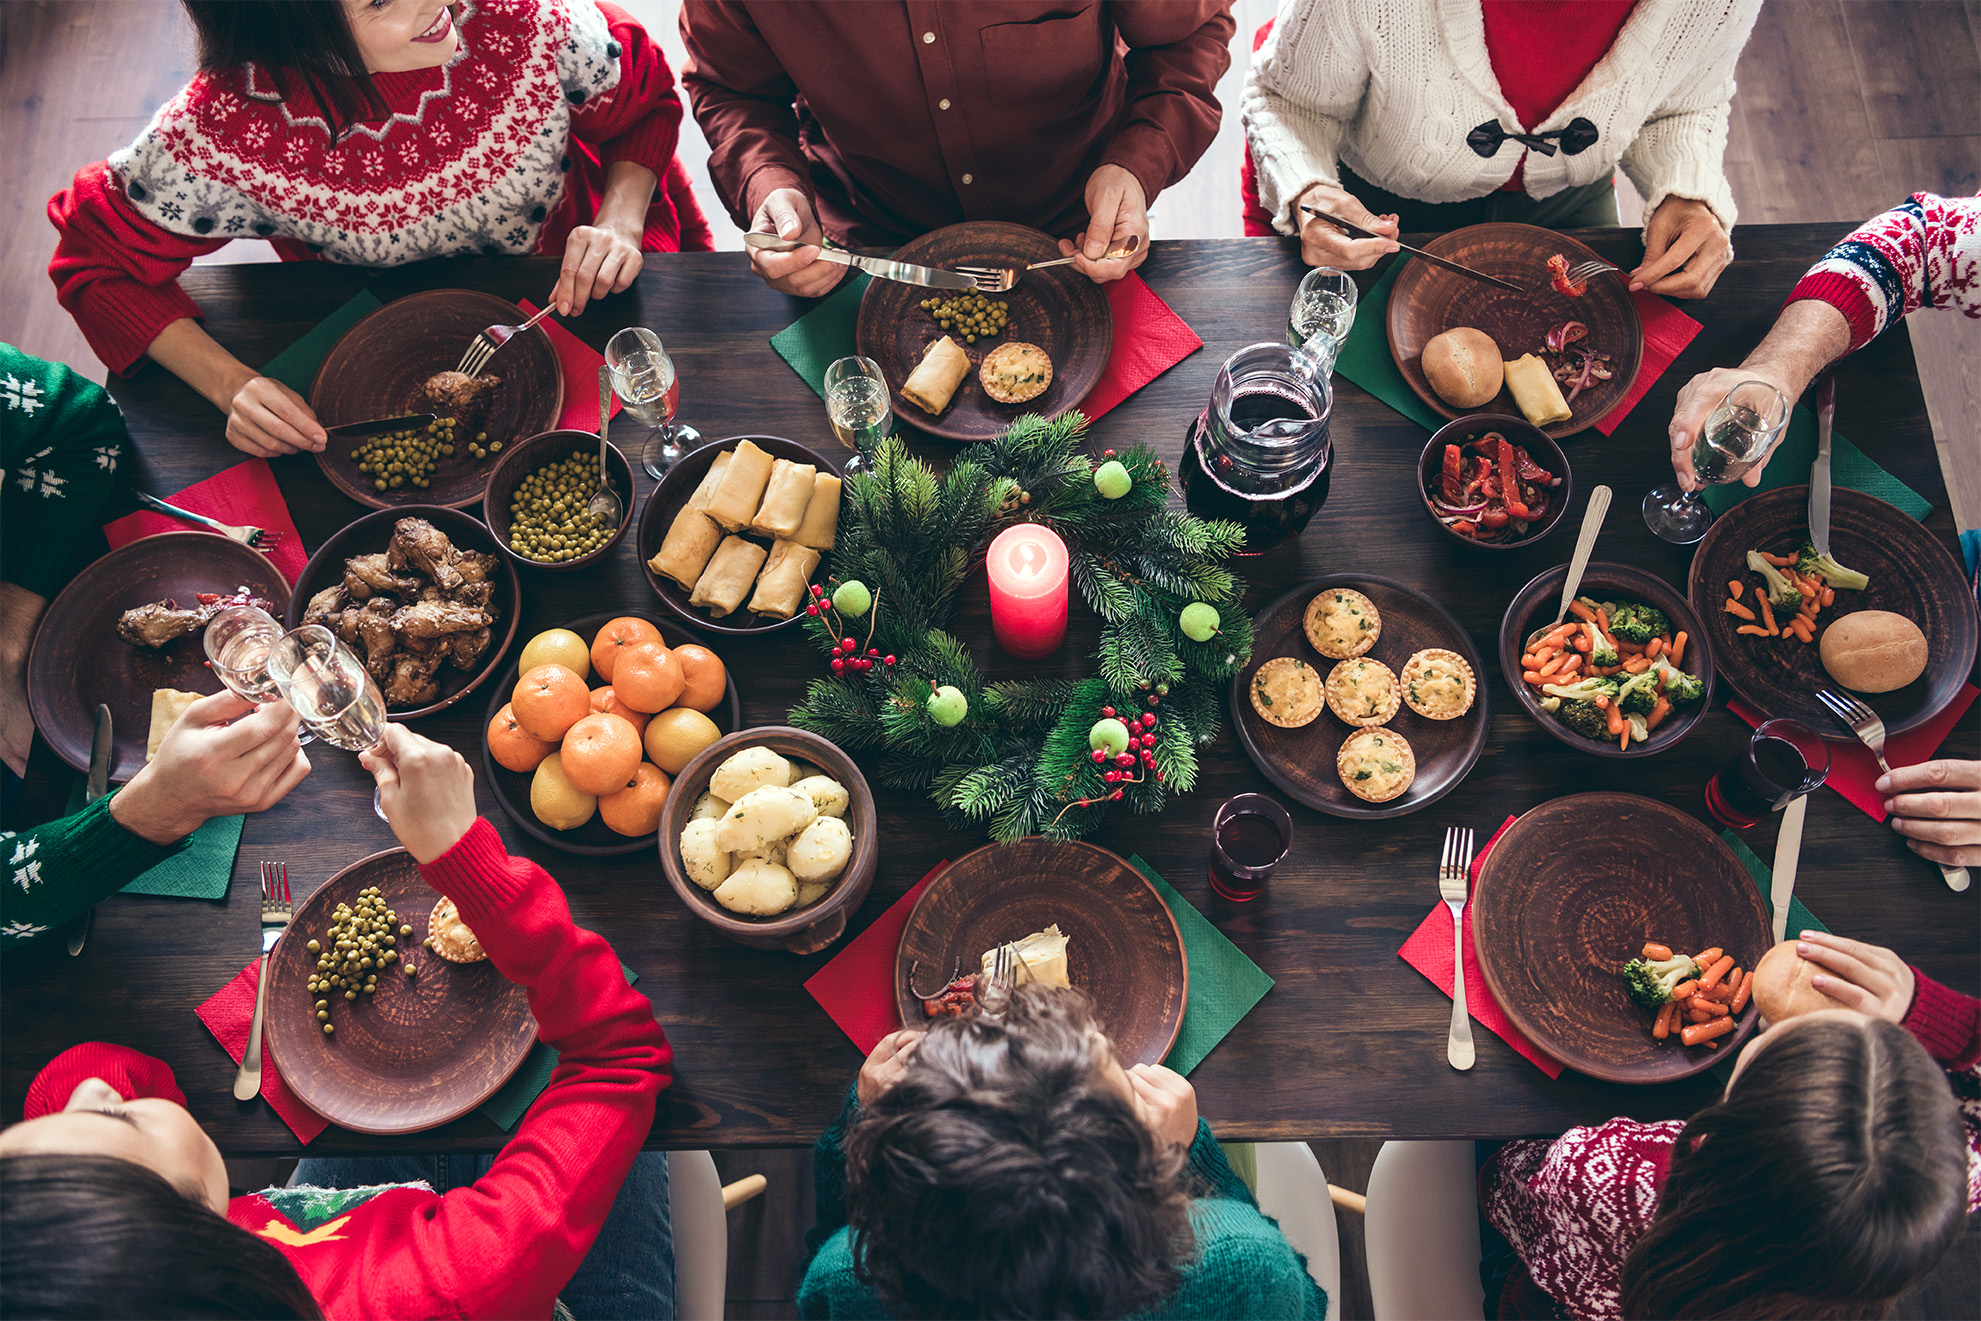 Cucina italiana: a Natale in tavola